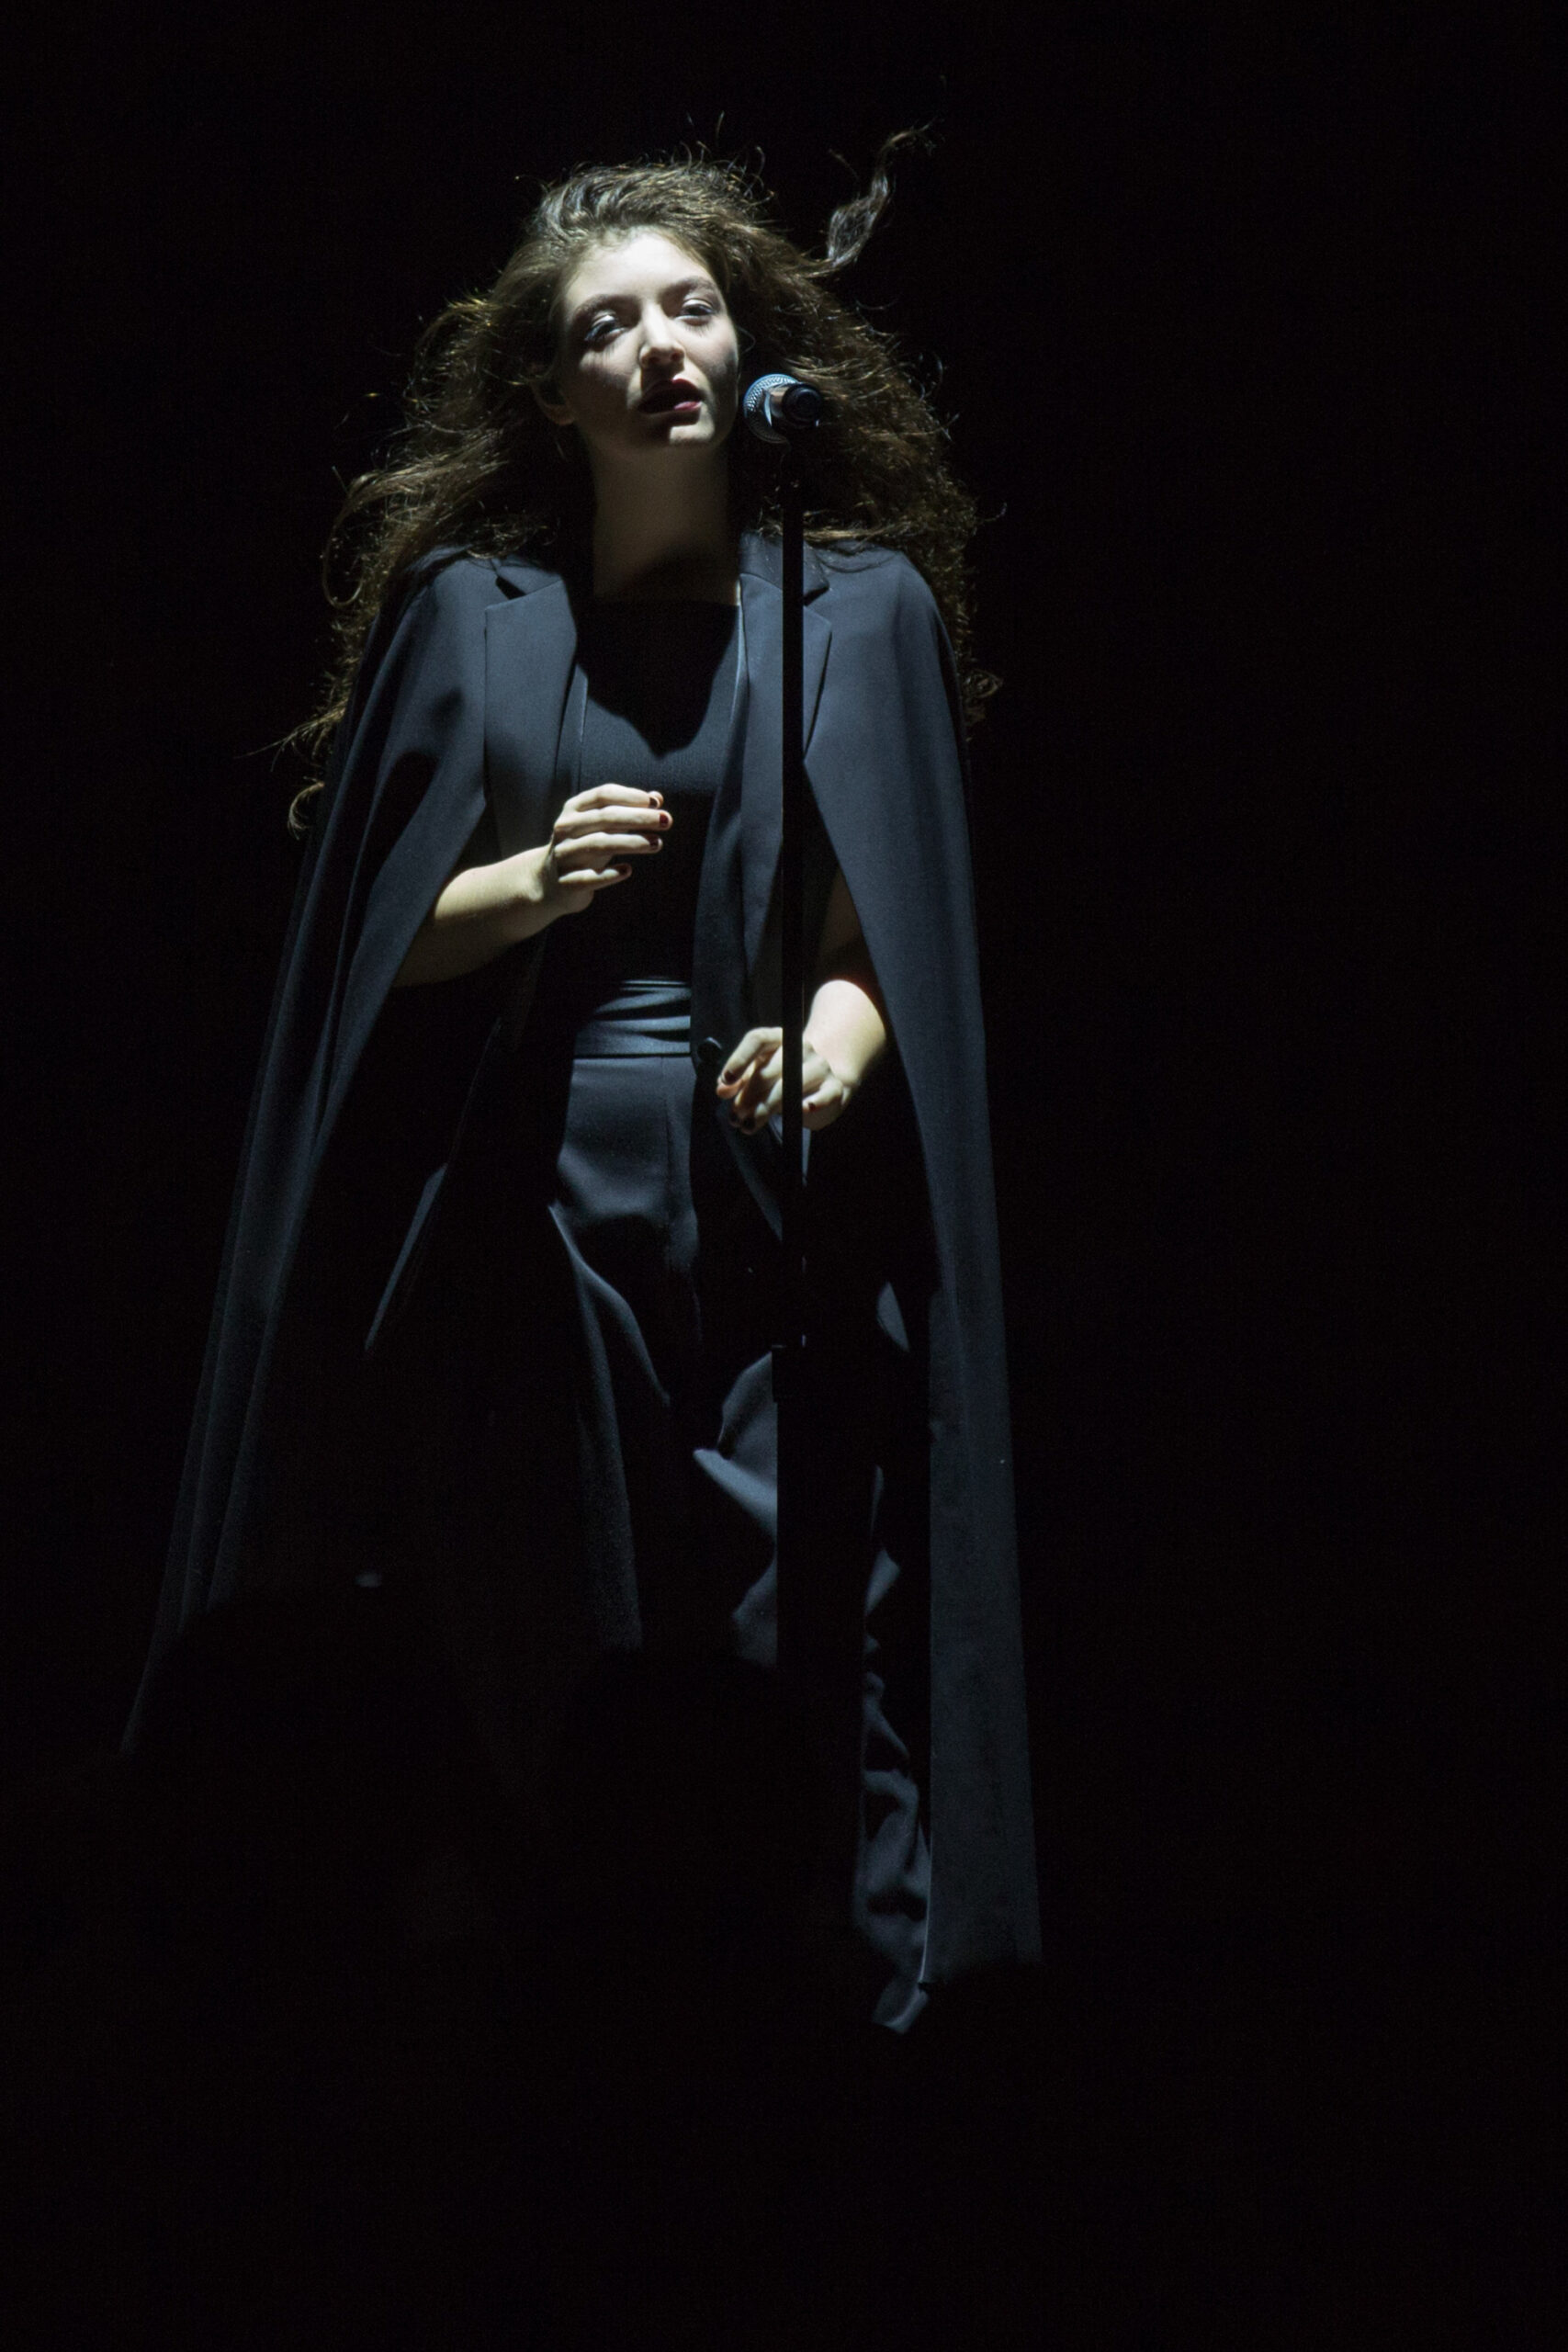 Singer Lorde performs on Sept. 5, 2014 at the Mann Center in Philadelphia, Pa. (Daniel DeSlover/Zuma Press/TNS)